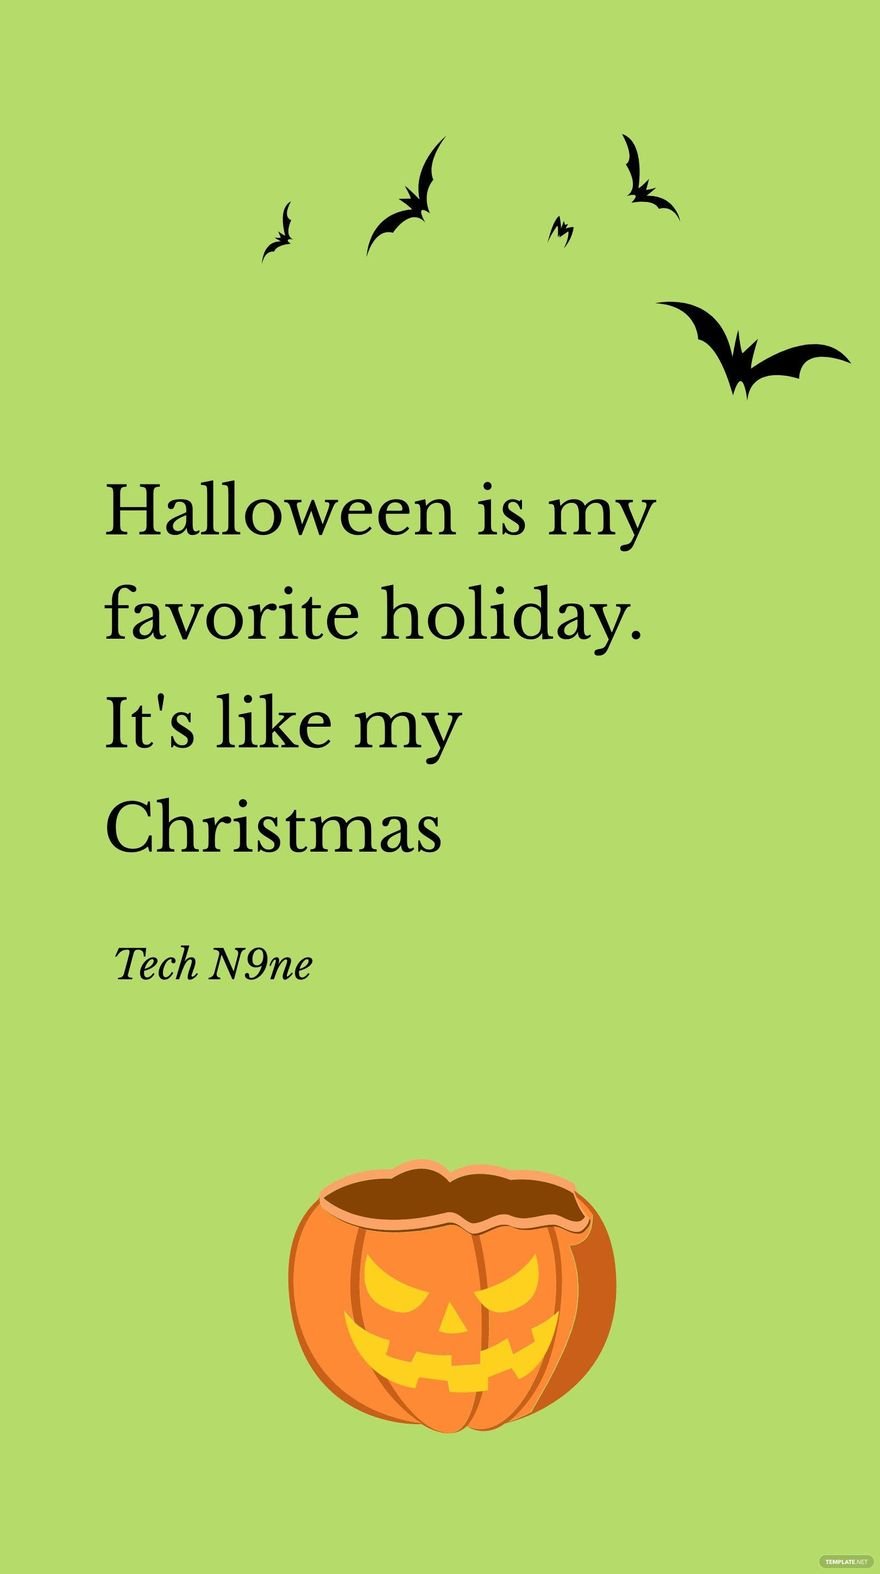 Free Tech N9ne- Halloween is my favorite holiday. It's like my Christmas.